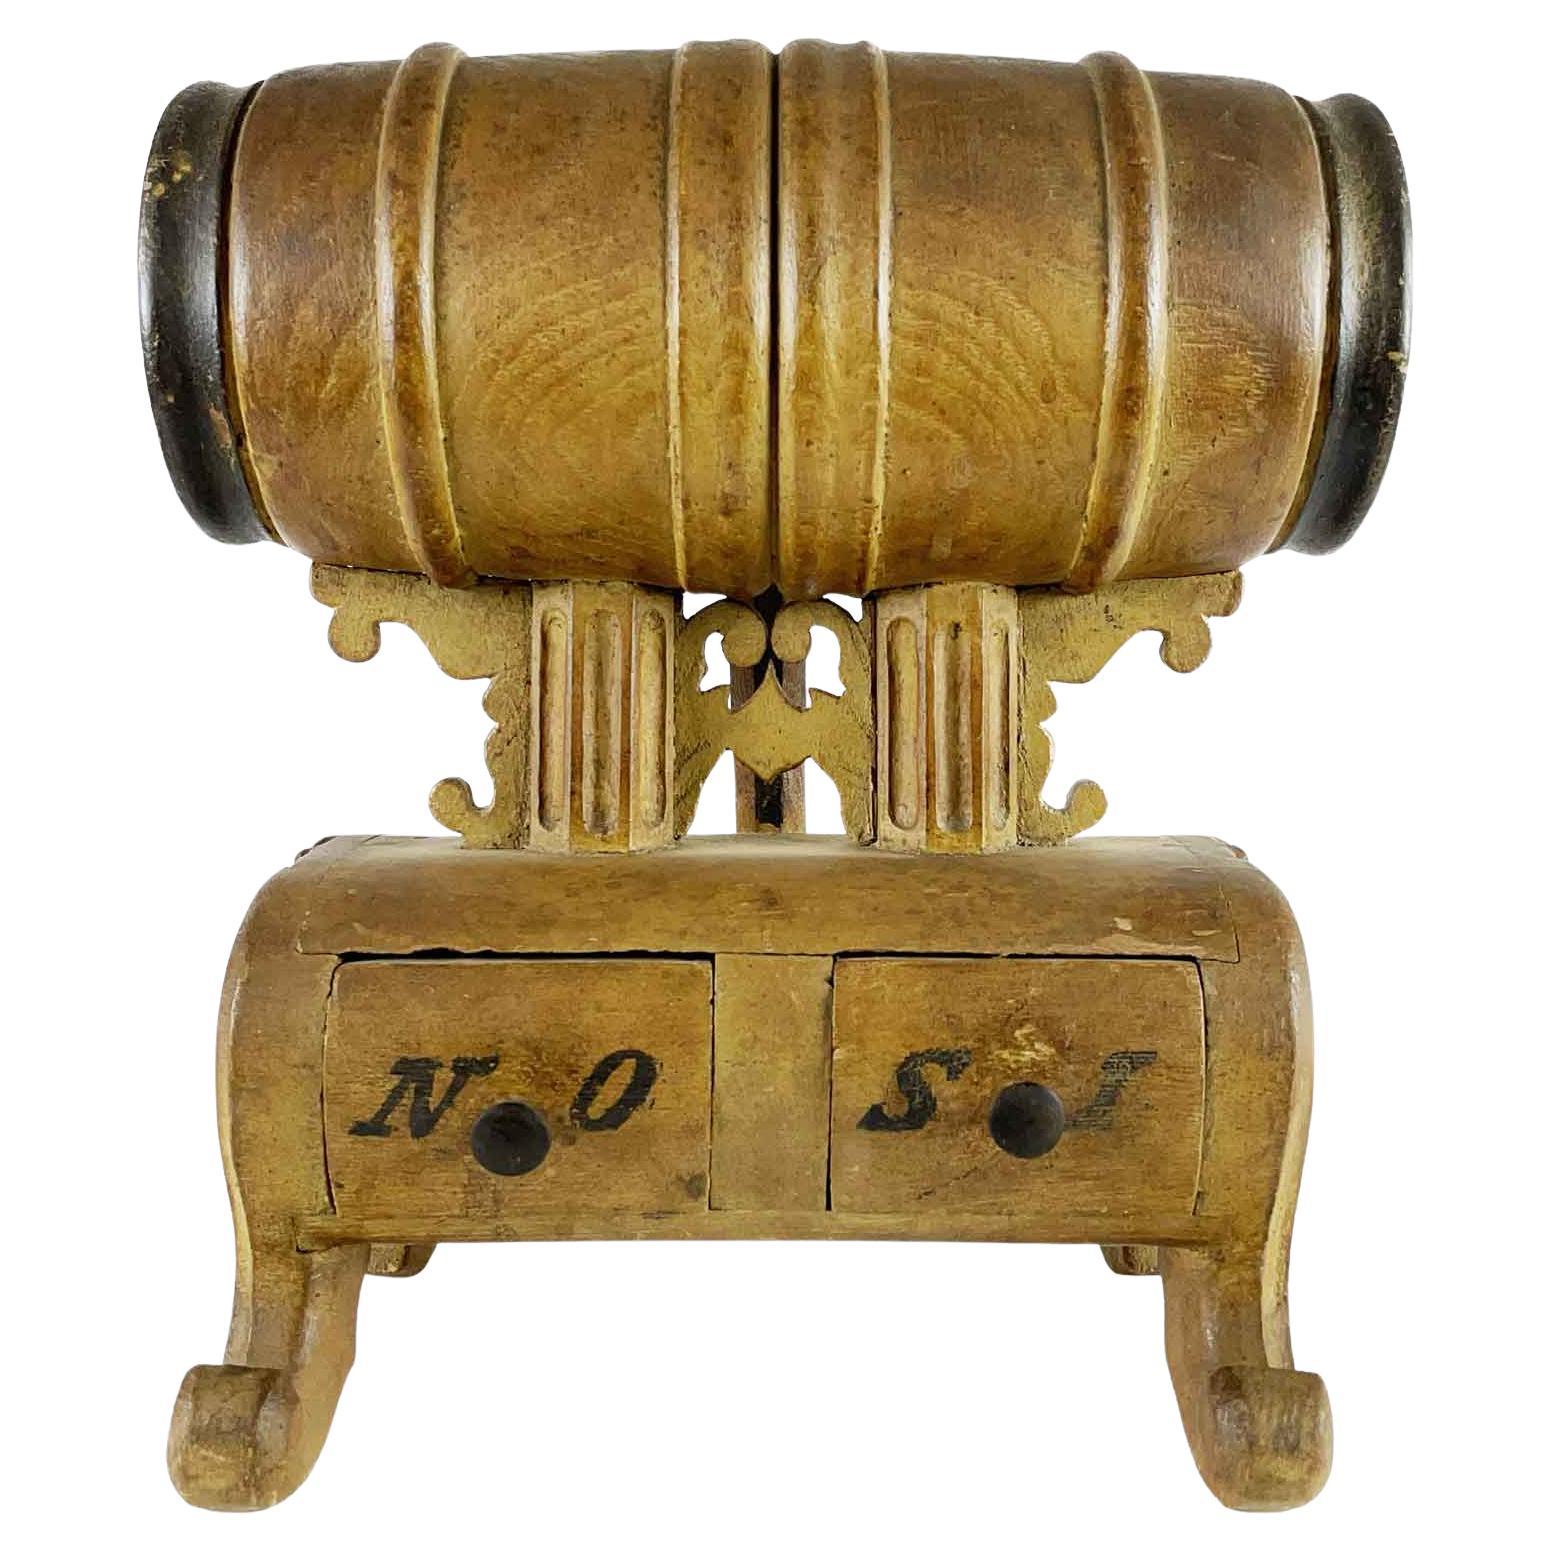 19th Century Italian Voting Box Tuscan Confraternity Carved Barrel Ballot Box